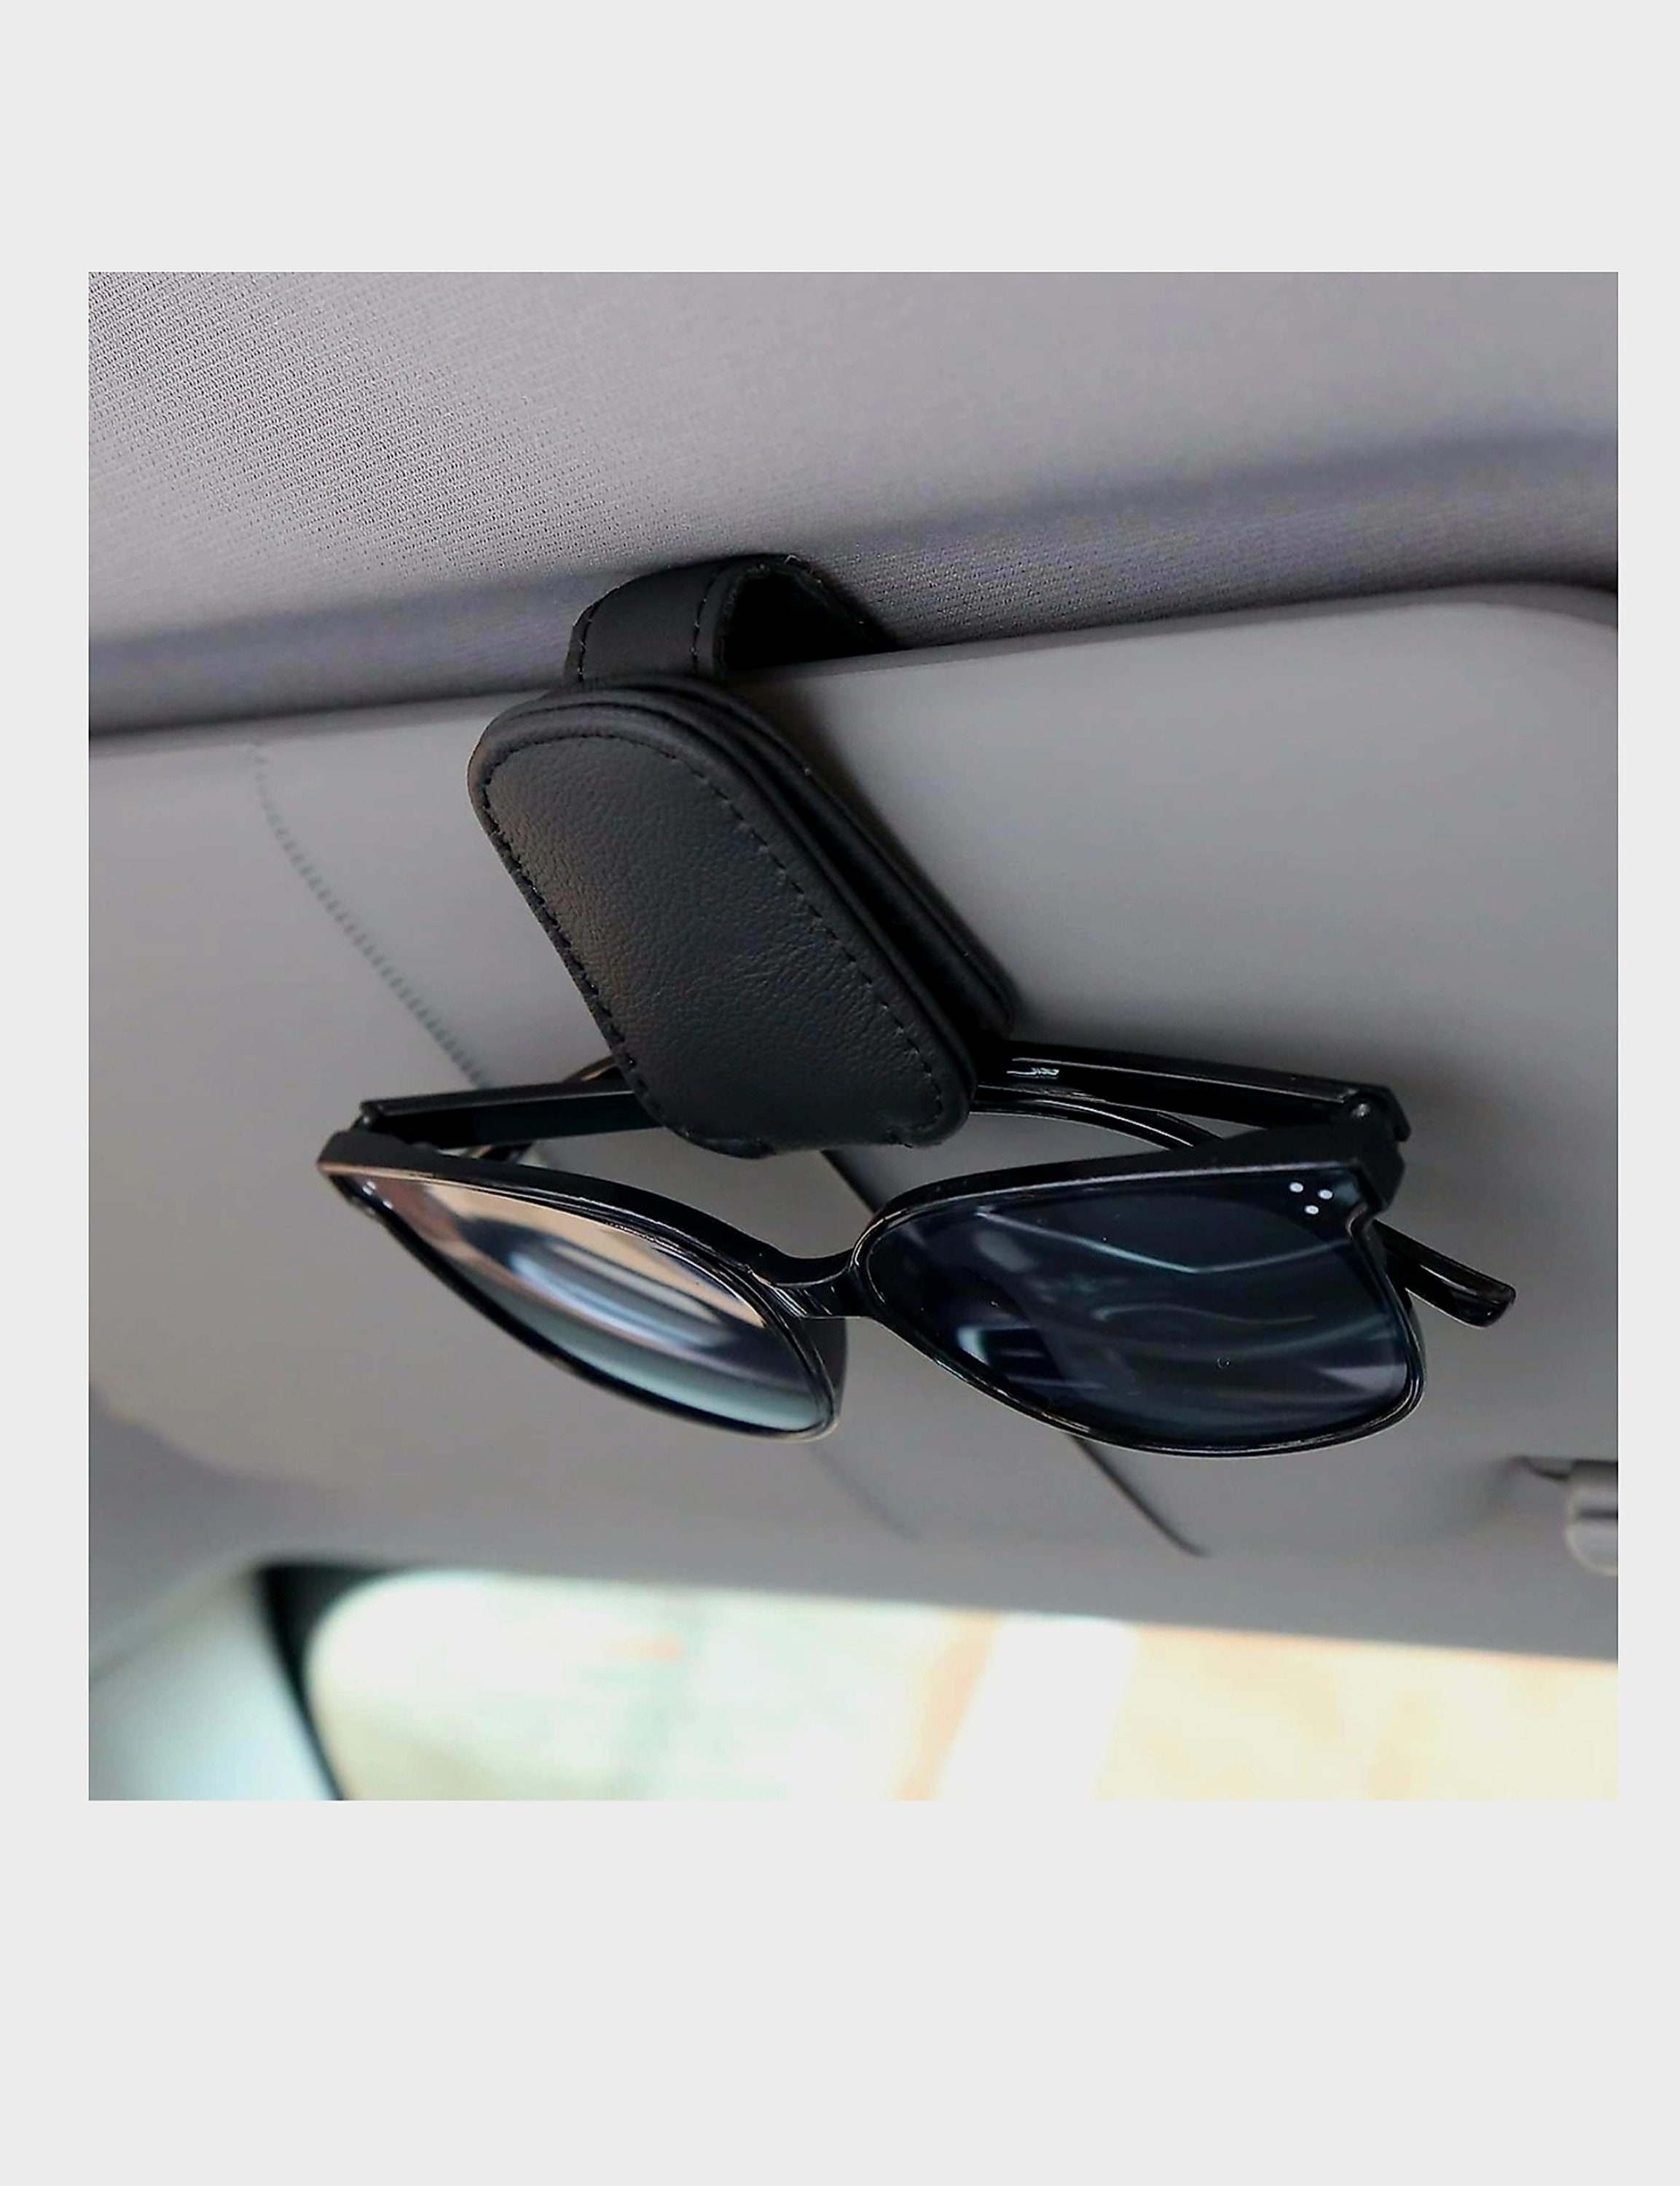 Sunglasses Clip Card Holder Car Sun Visor Storage Glasses Rece